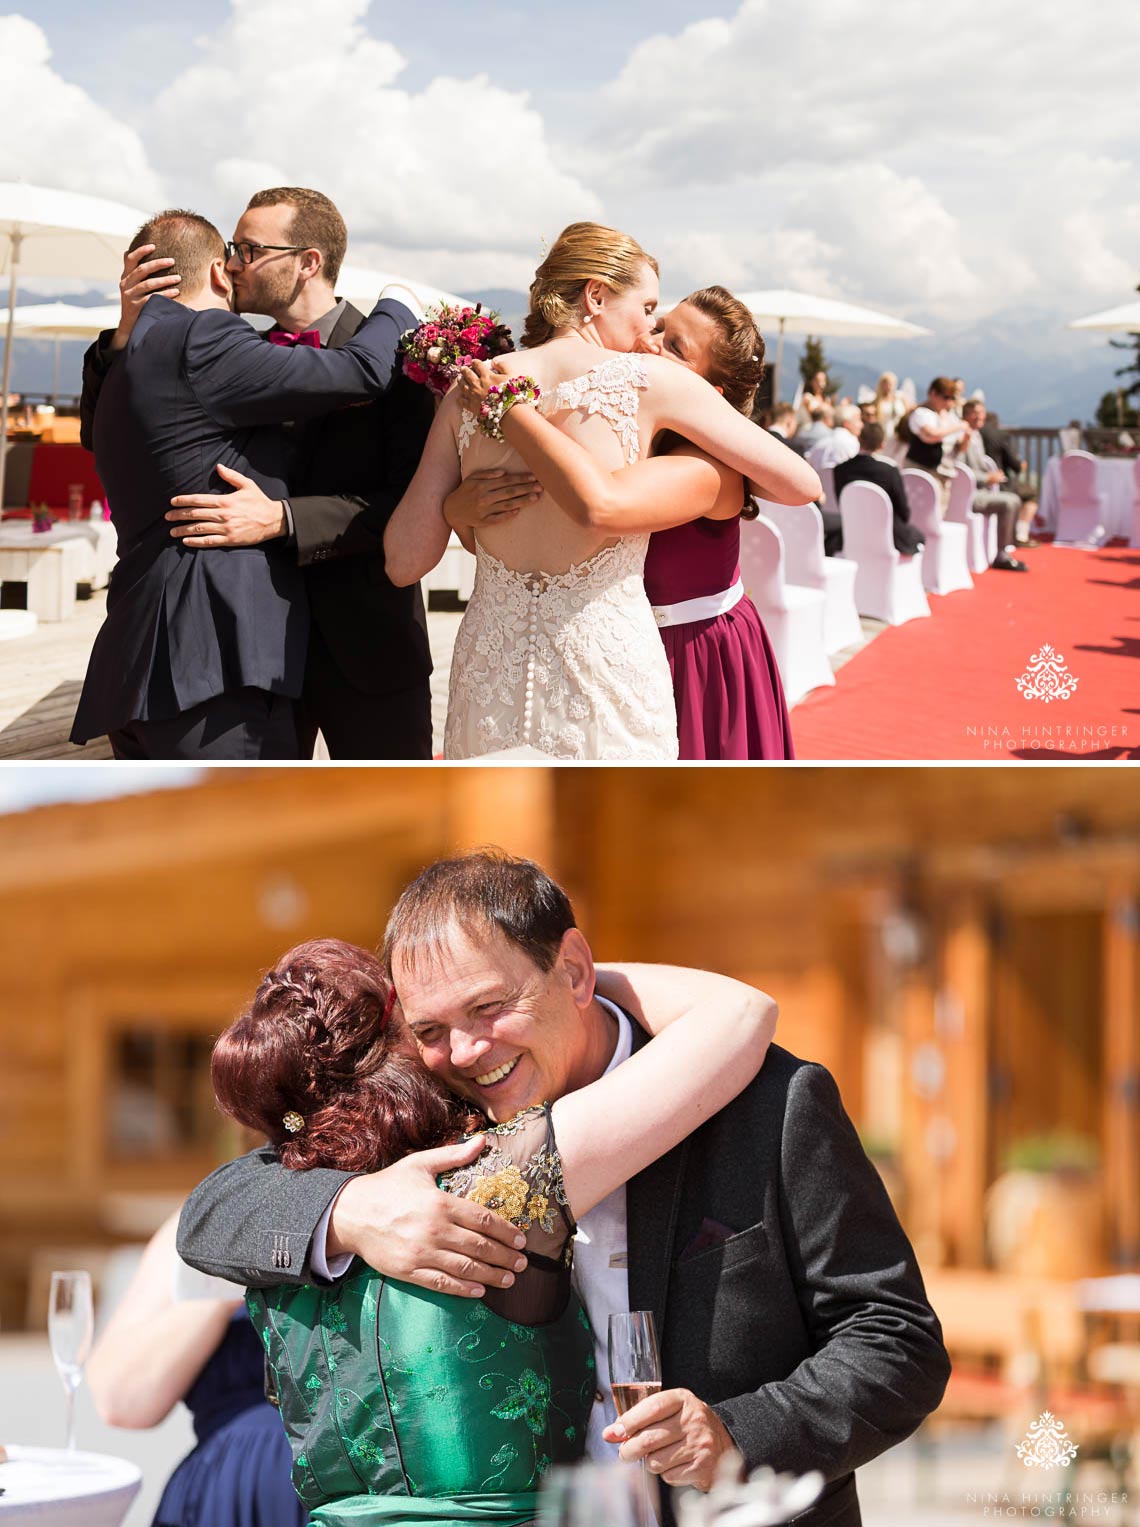 Berry themed Mountain Wedding | Platzlalm Zillertal | Angelina & Tobias - Blog of Nina Hintringer Photography - Wedding Photography, Wedding Reportage and Destination Weddings